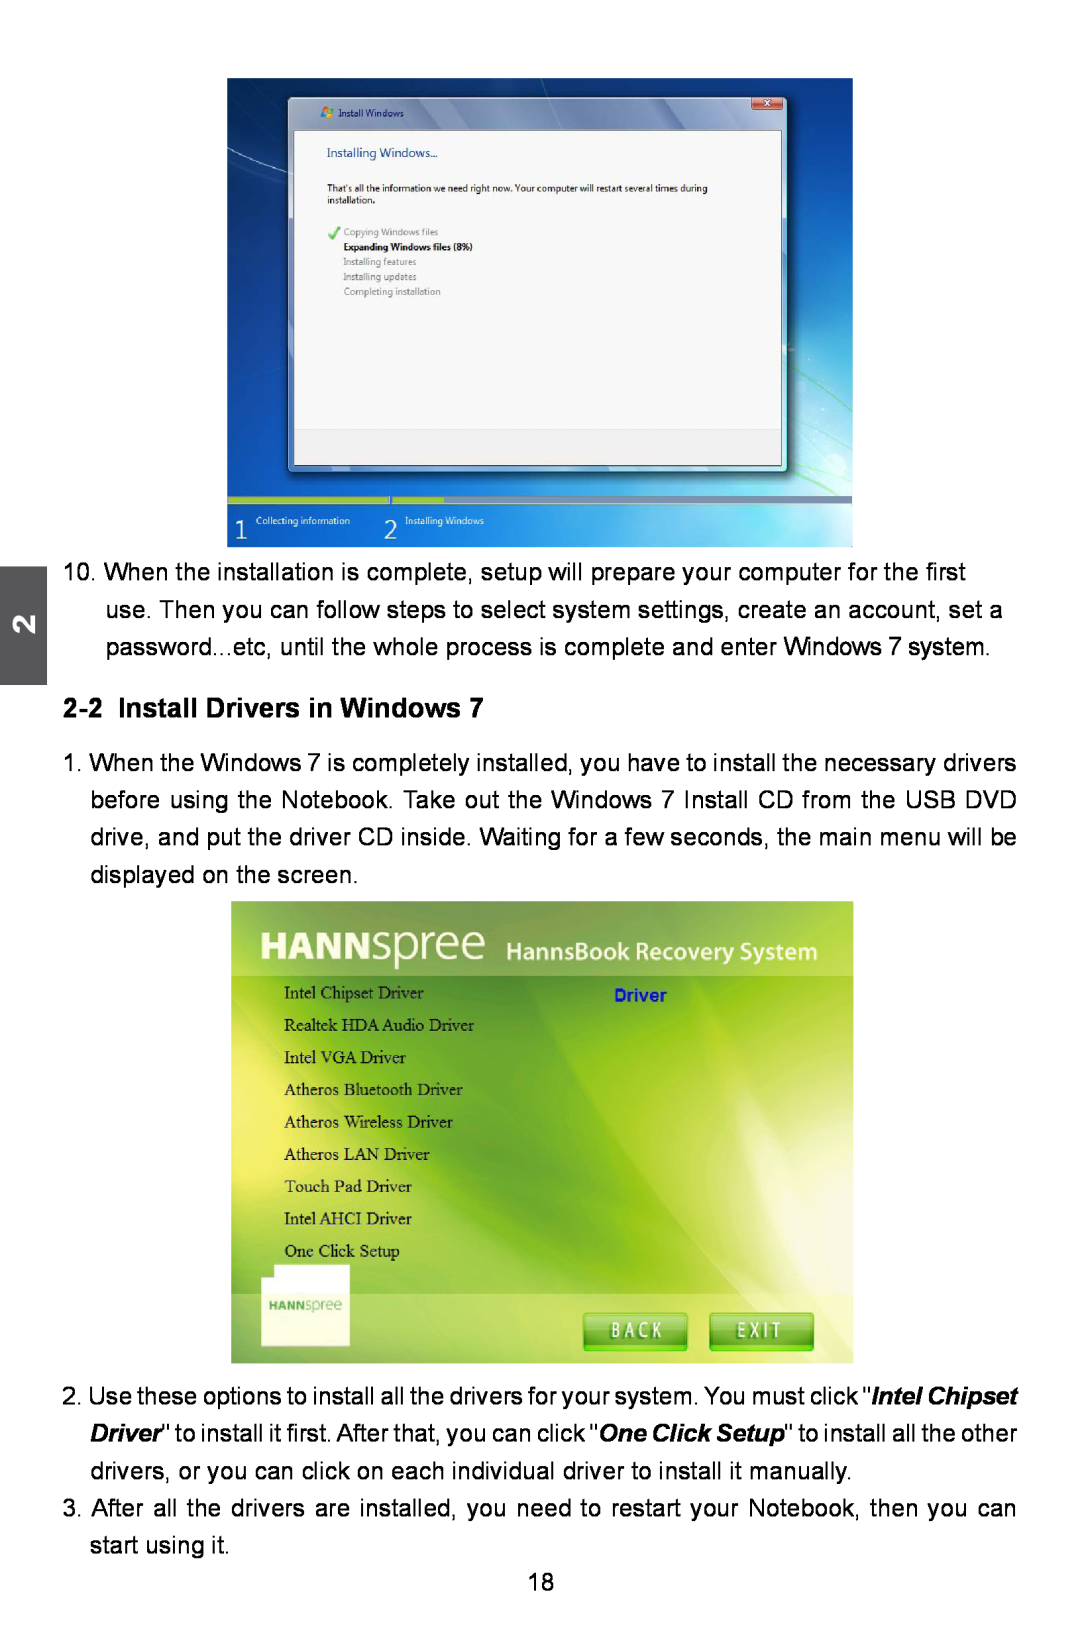 HANNspree SN12E2 manual Install Drivers in Windows 